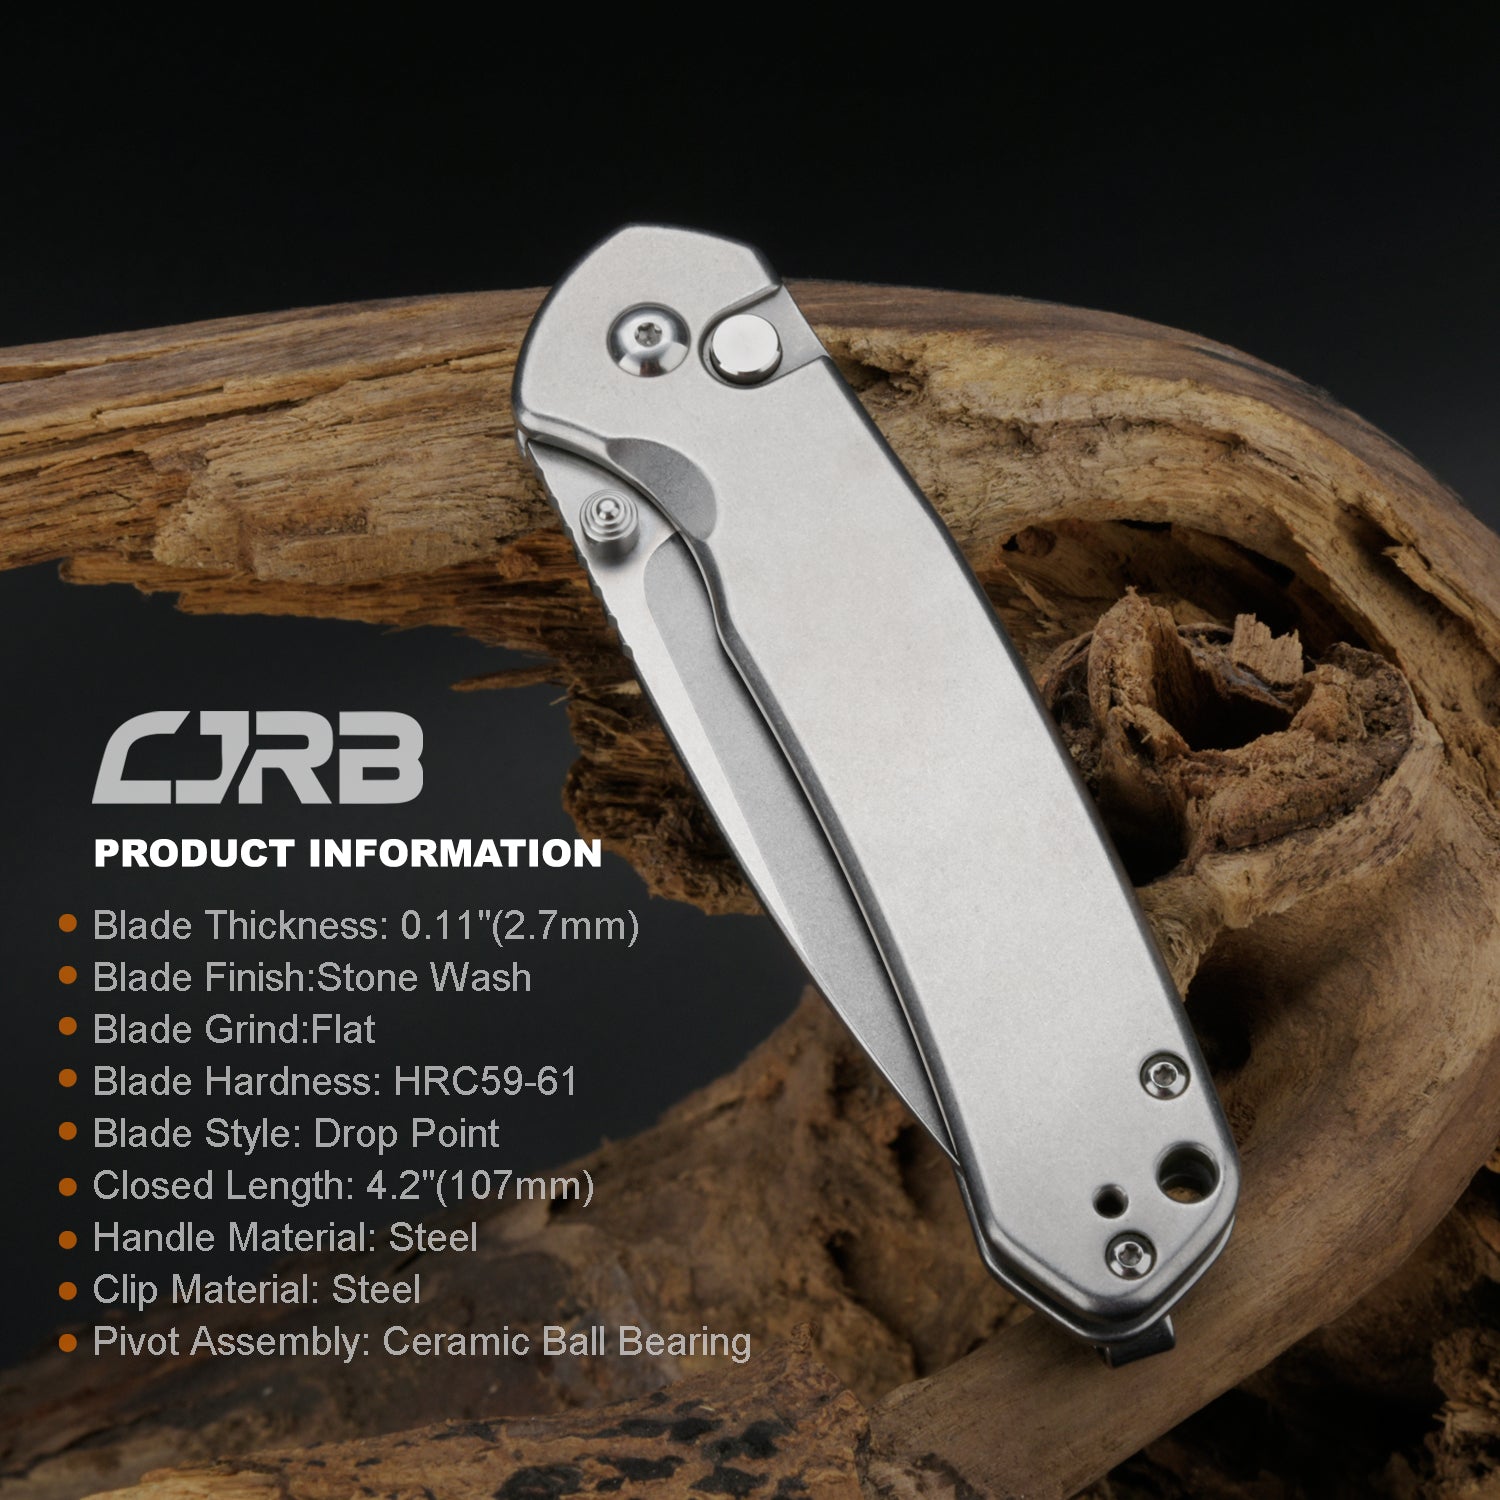 CJRB Pyrite J1925 AR-RPM9 POWDER STEEL BLADE STEEL HANDLE FOLDING KNIVES